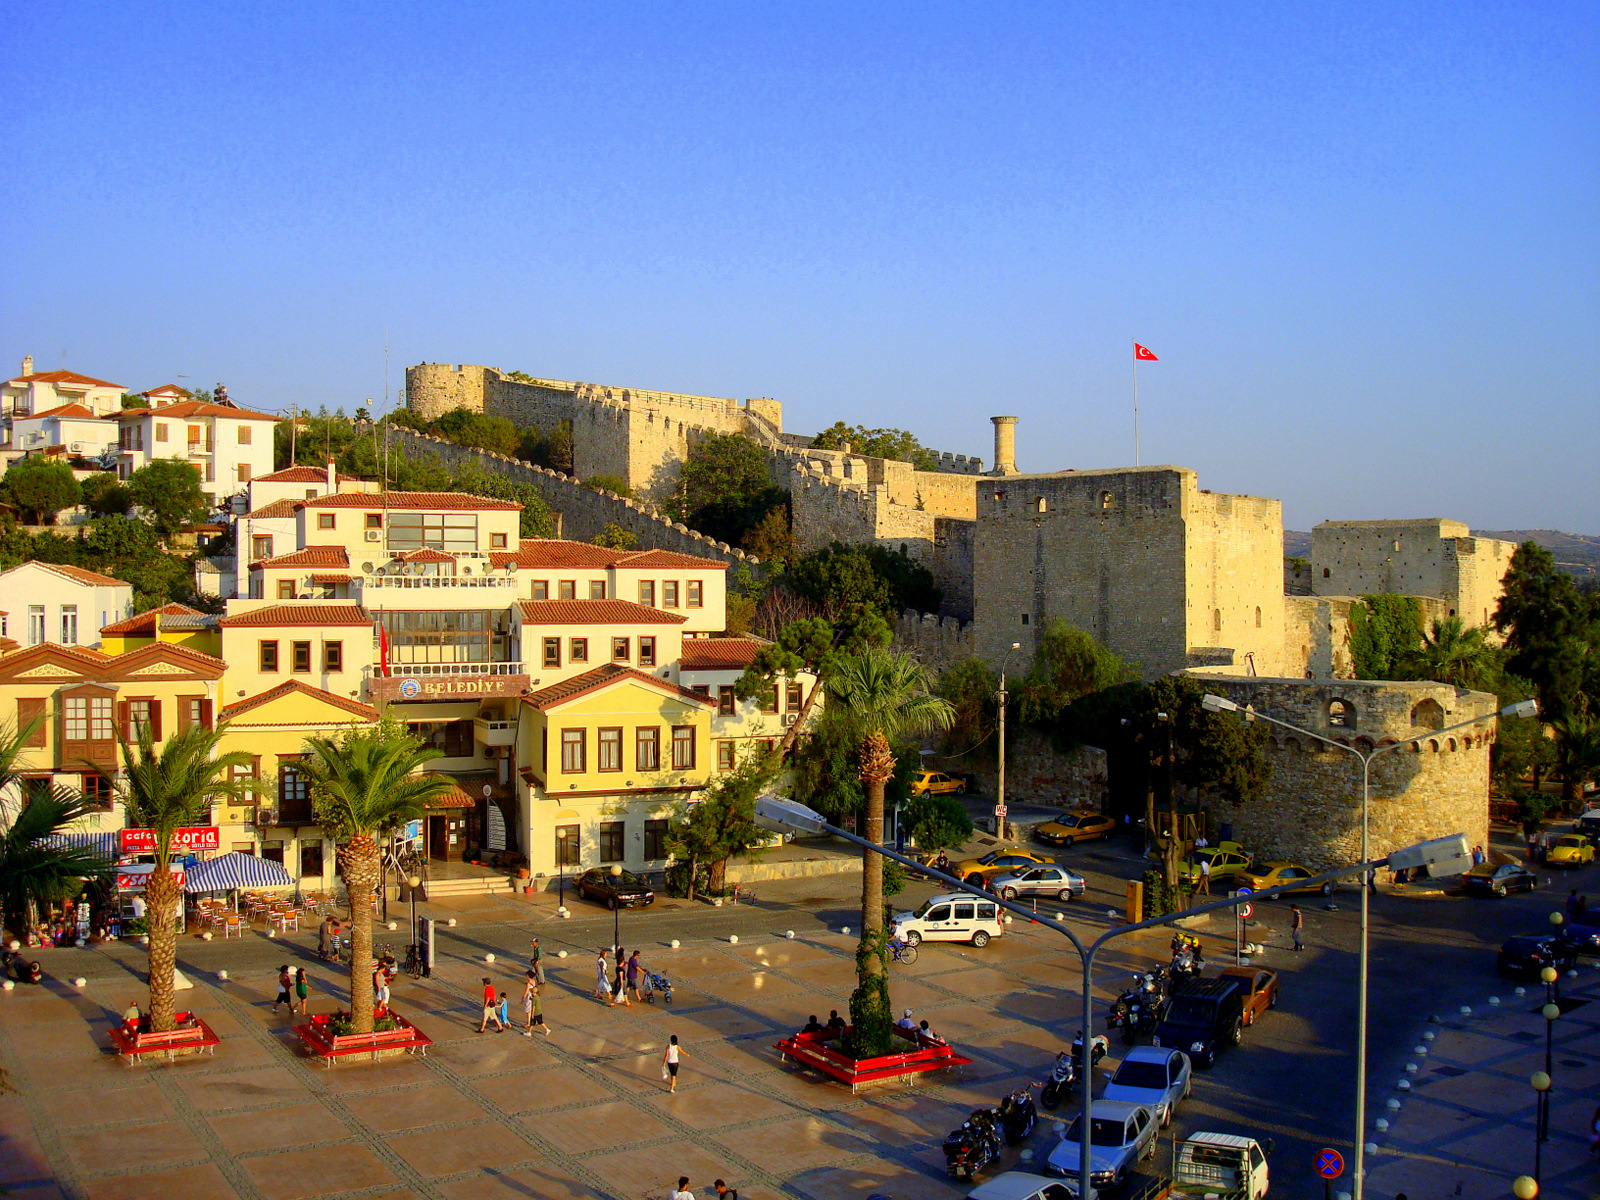 File:Turkish.town.cesme.jpg - Wikimedia Commons